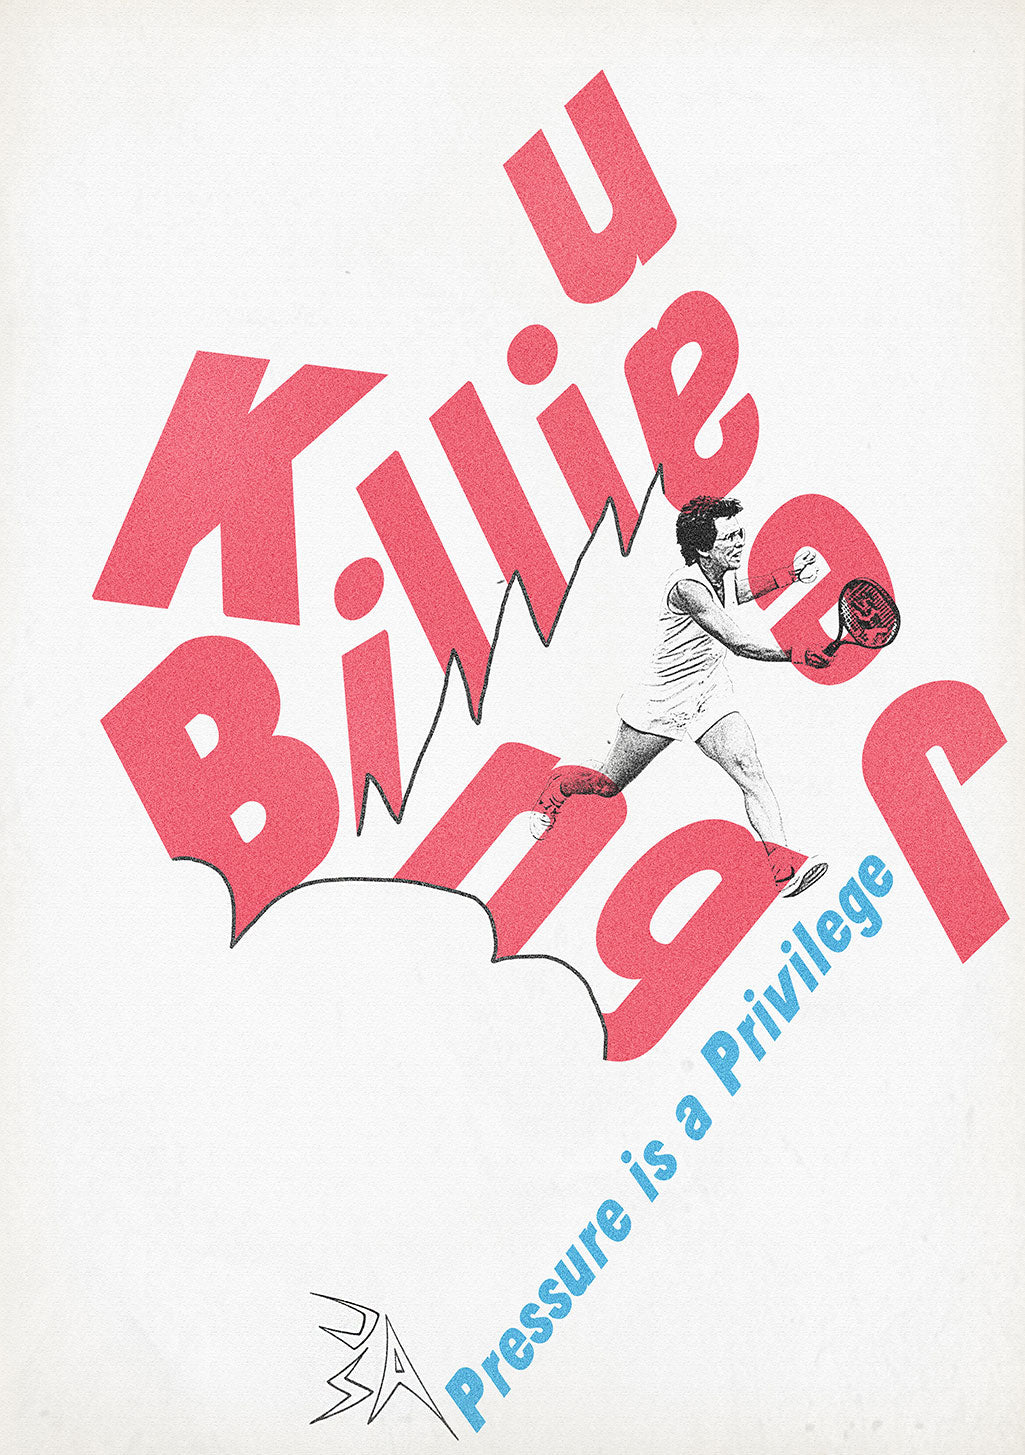 Billie Jean King 2